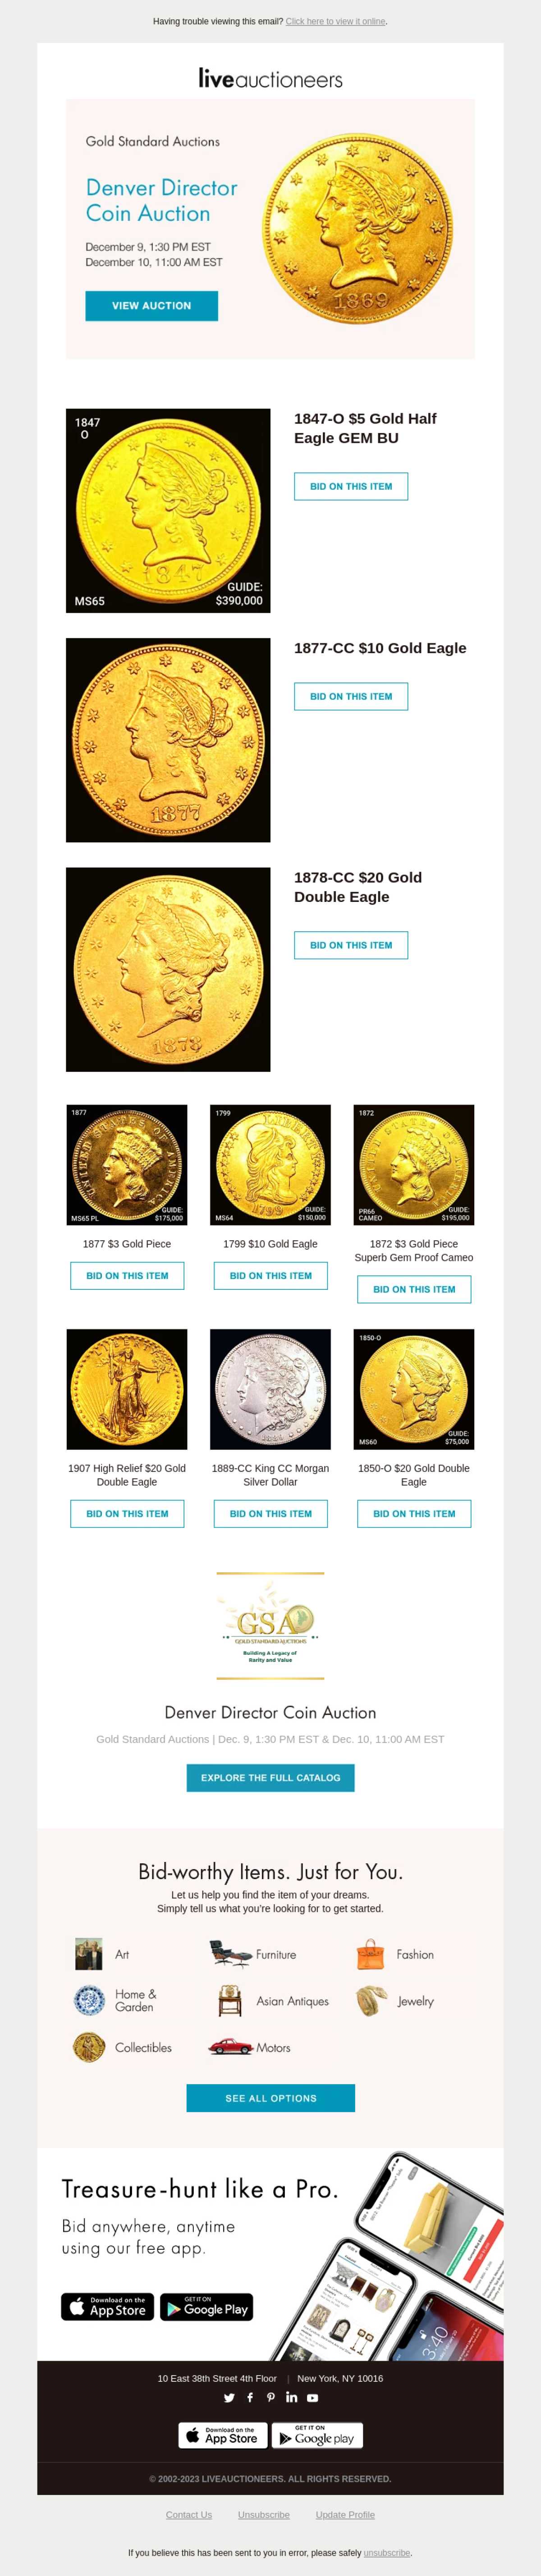 Gold Standard Auctions | Denver Director Coin Auction